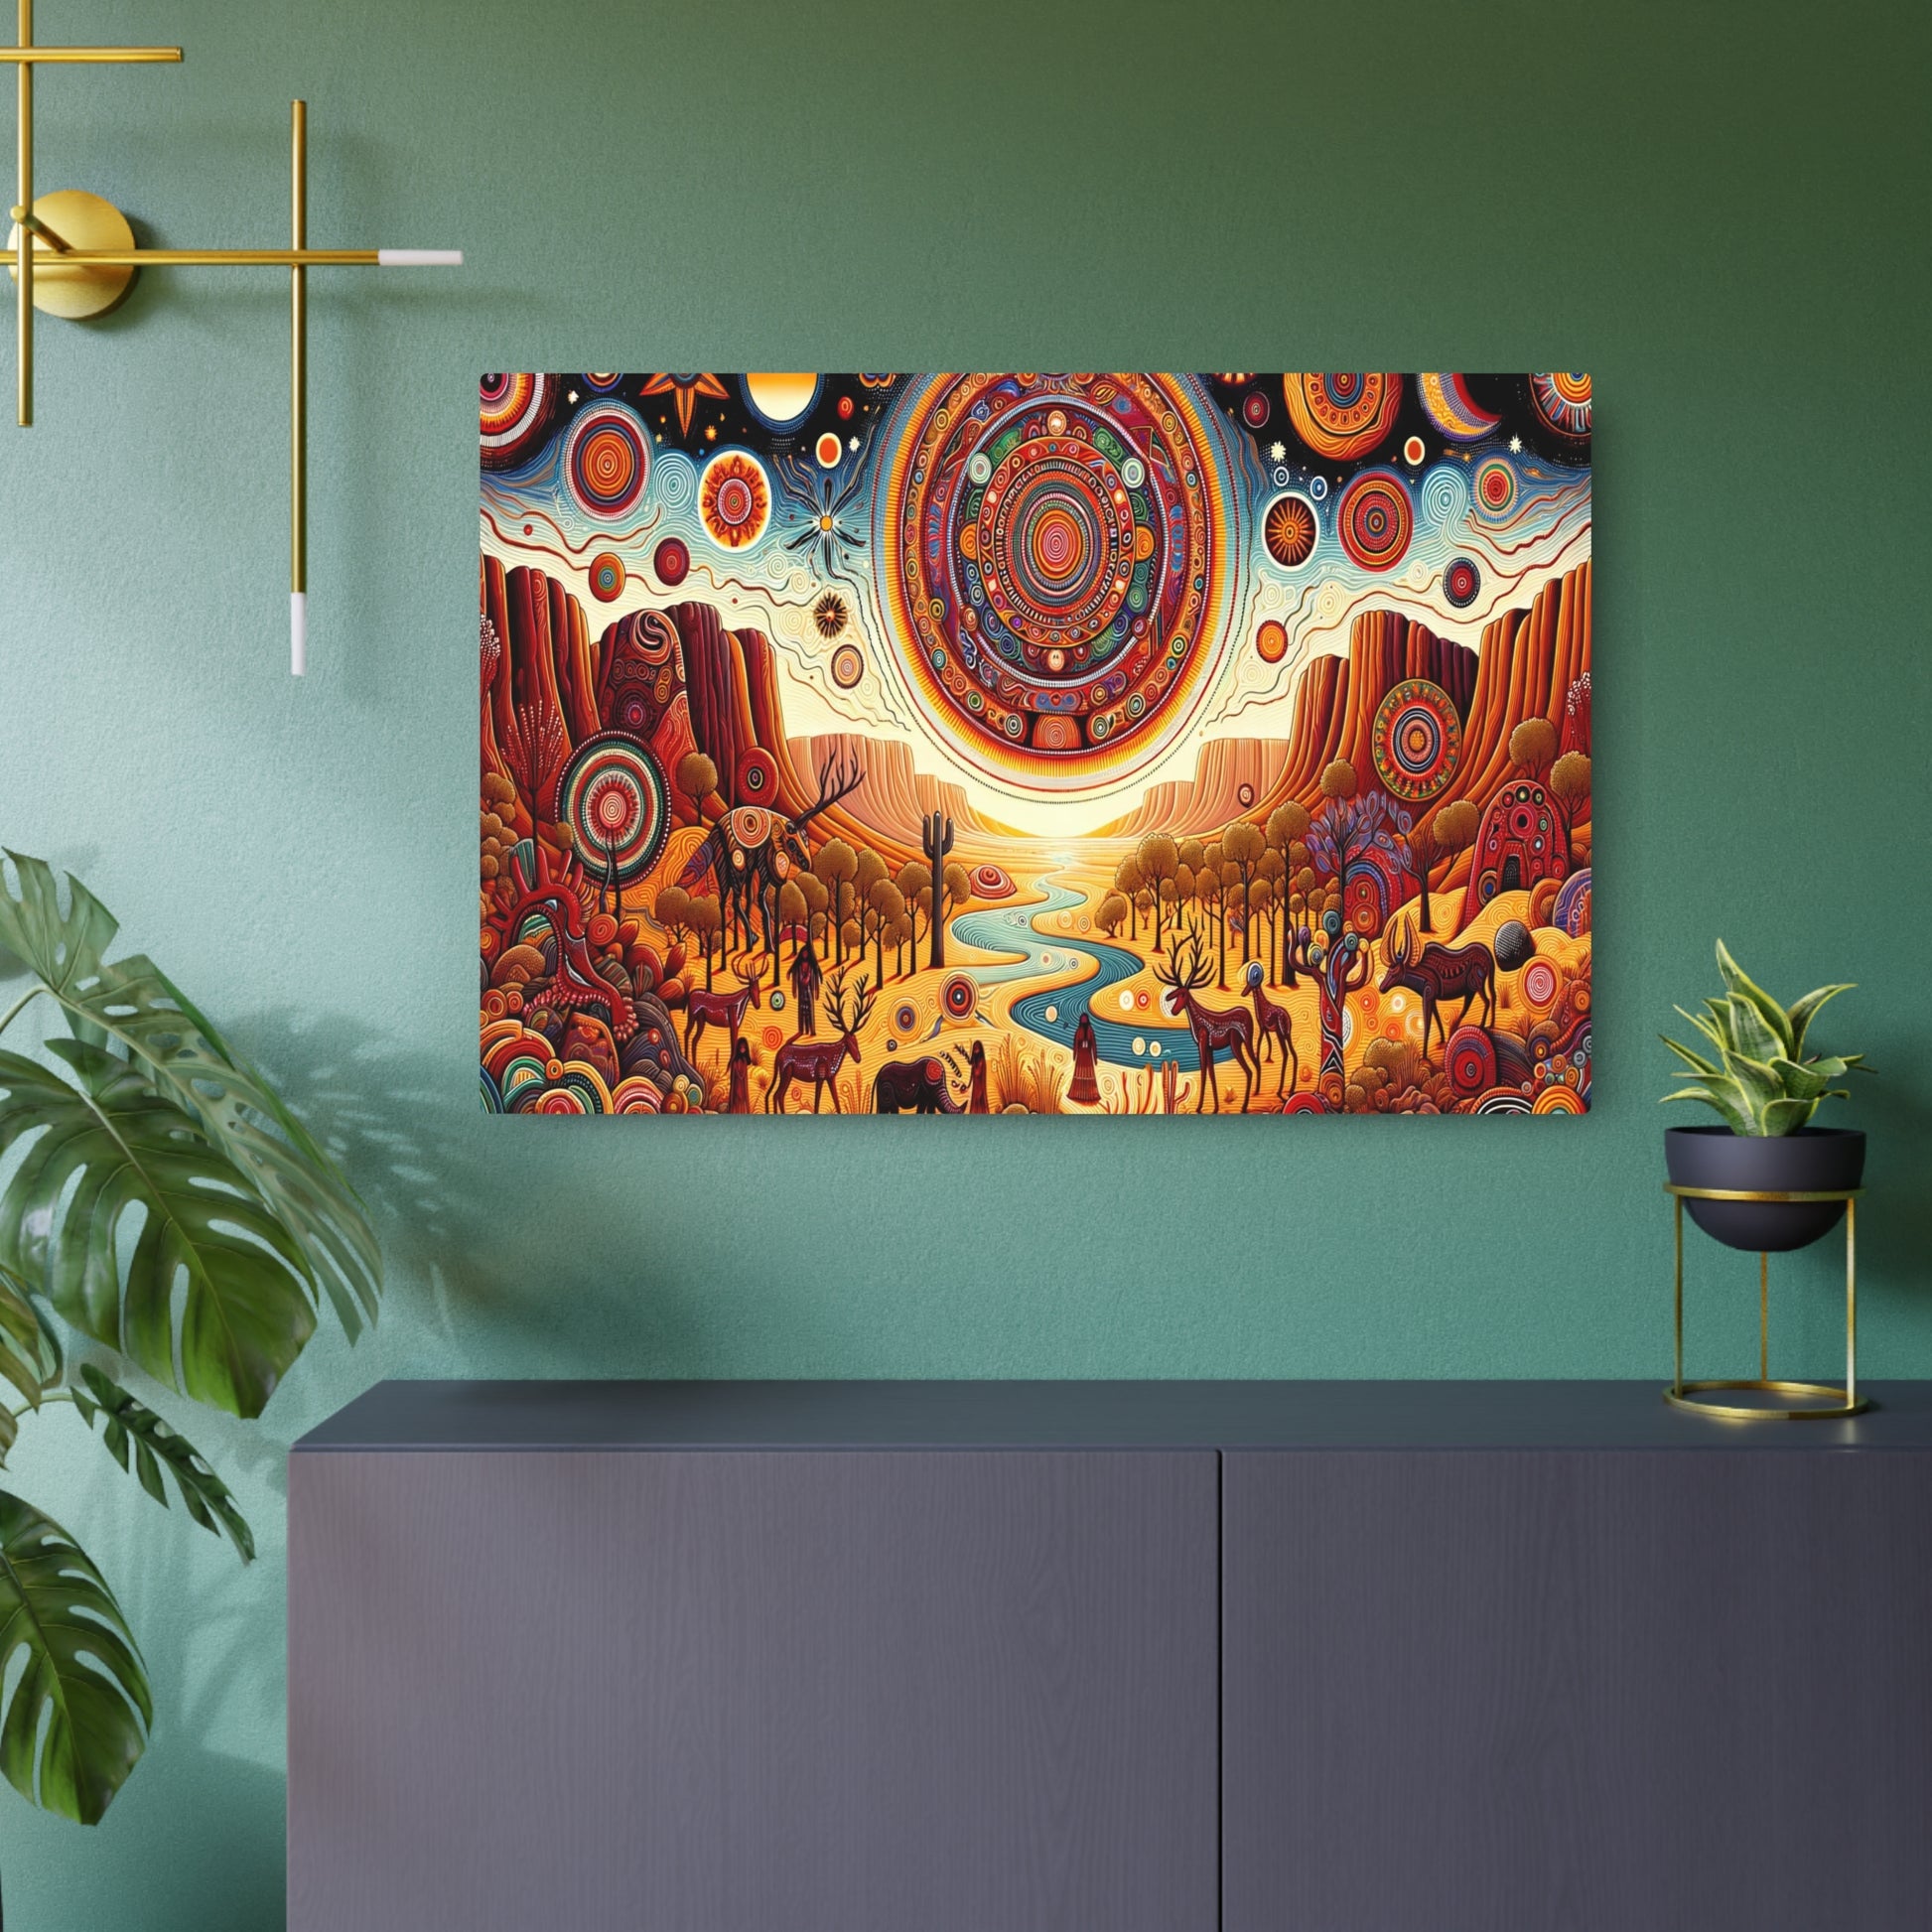 Metal Poster Art | "Vibrant Traditional Aboriginal Australian Art - Rich in Color, Pattern and Spiritual Symbolism"